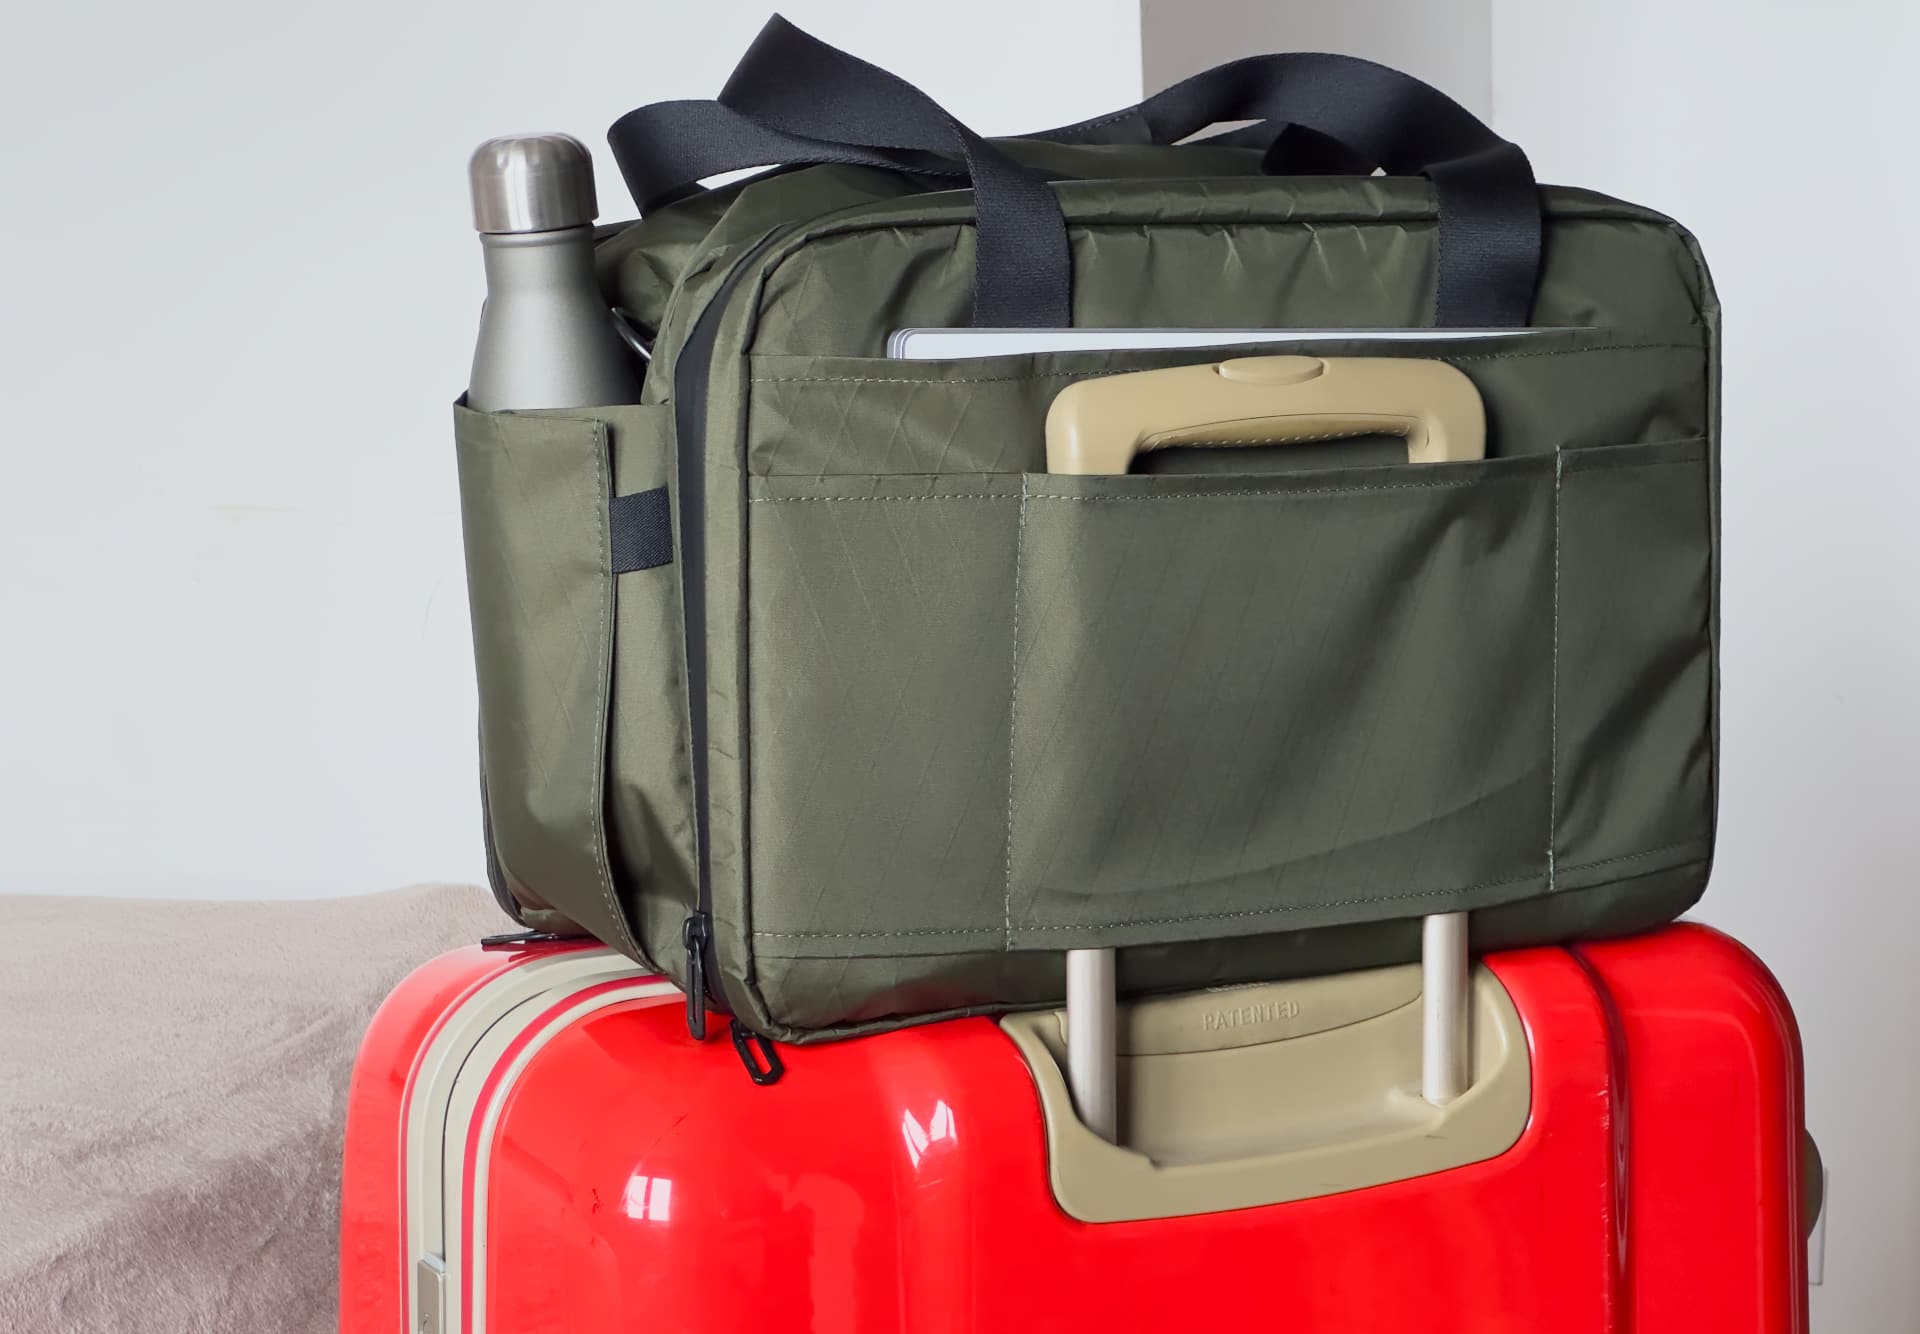 Waterfield's X-Air Duffel travel bag suitcase handle passthrough